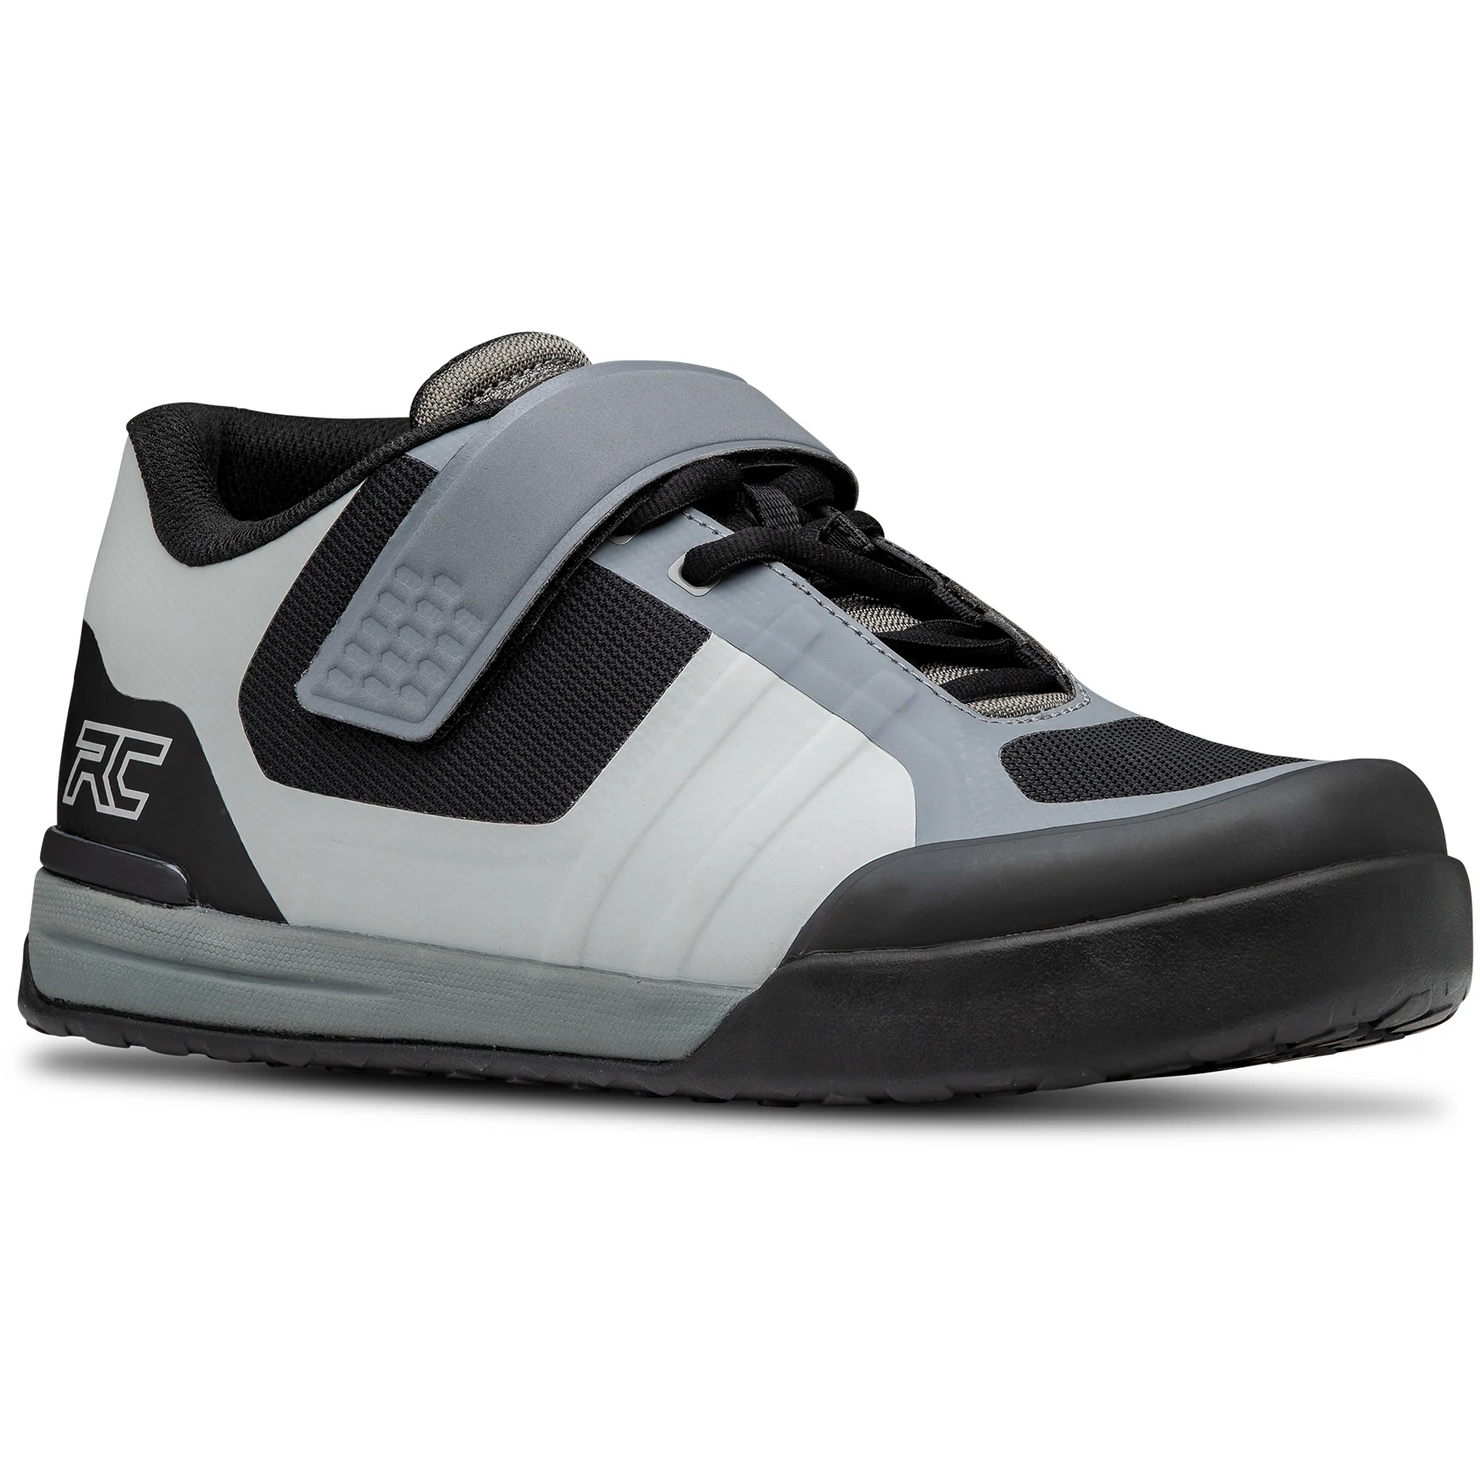 Productfoto van Ride Concepts Transition Clip Men&#039;s Shoe - Charcoal/Grey